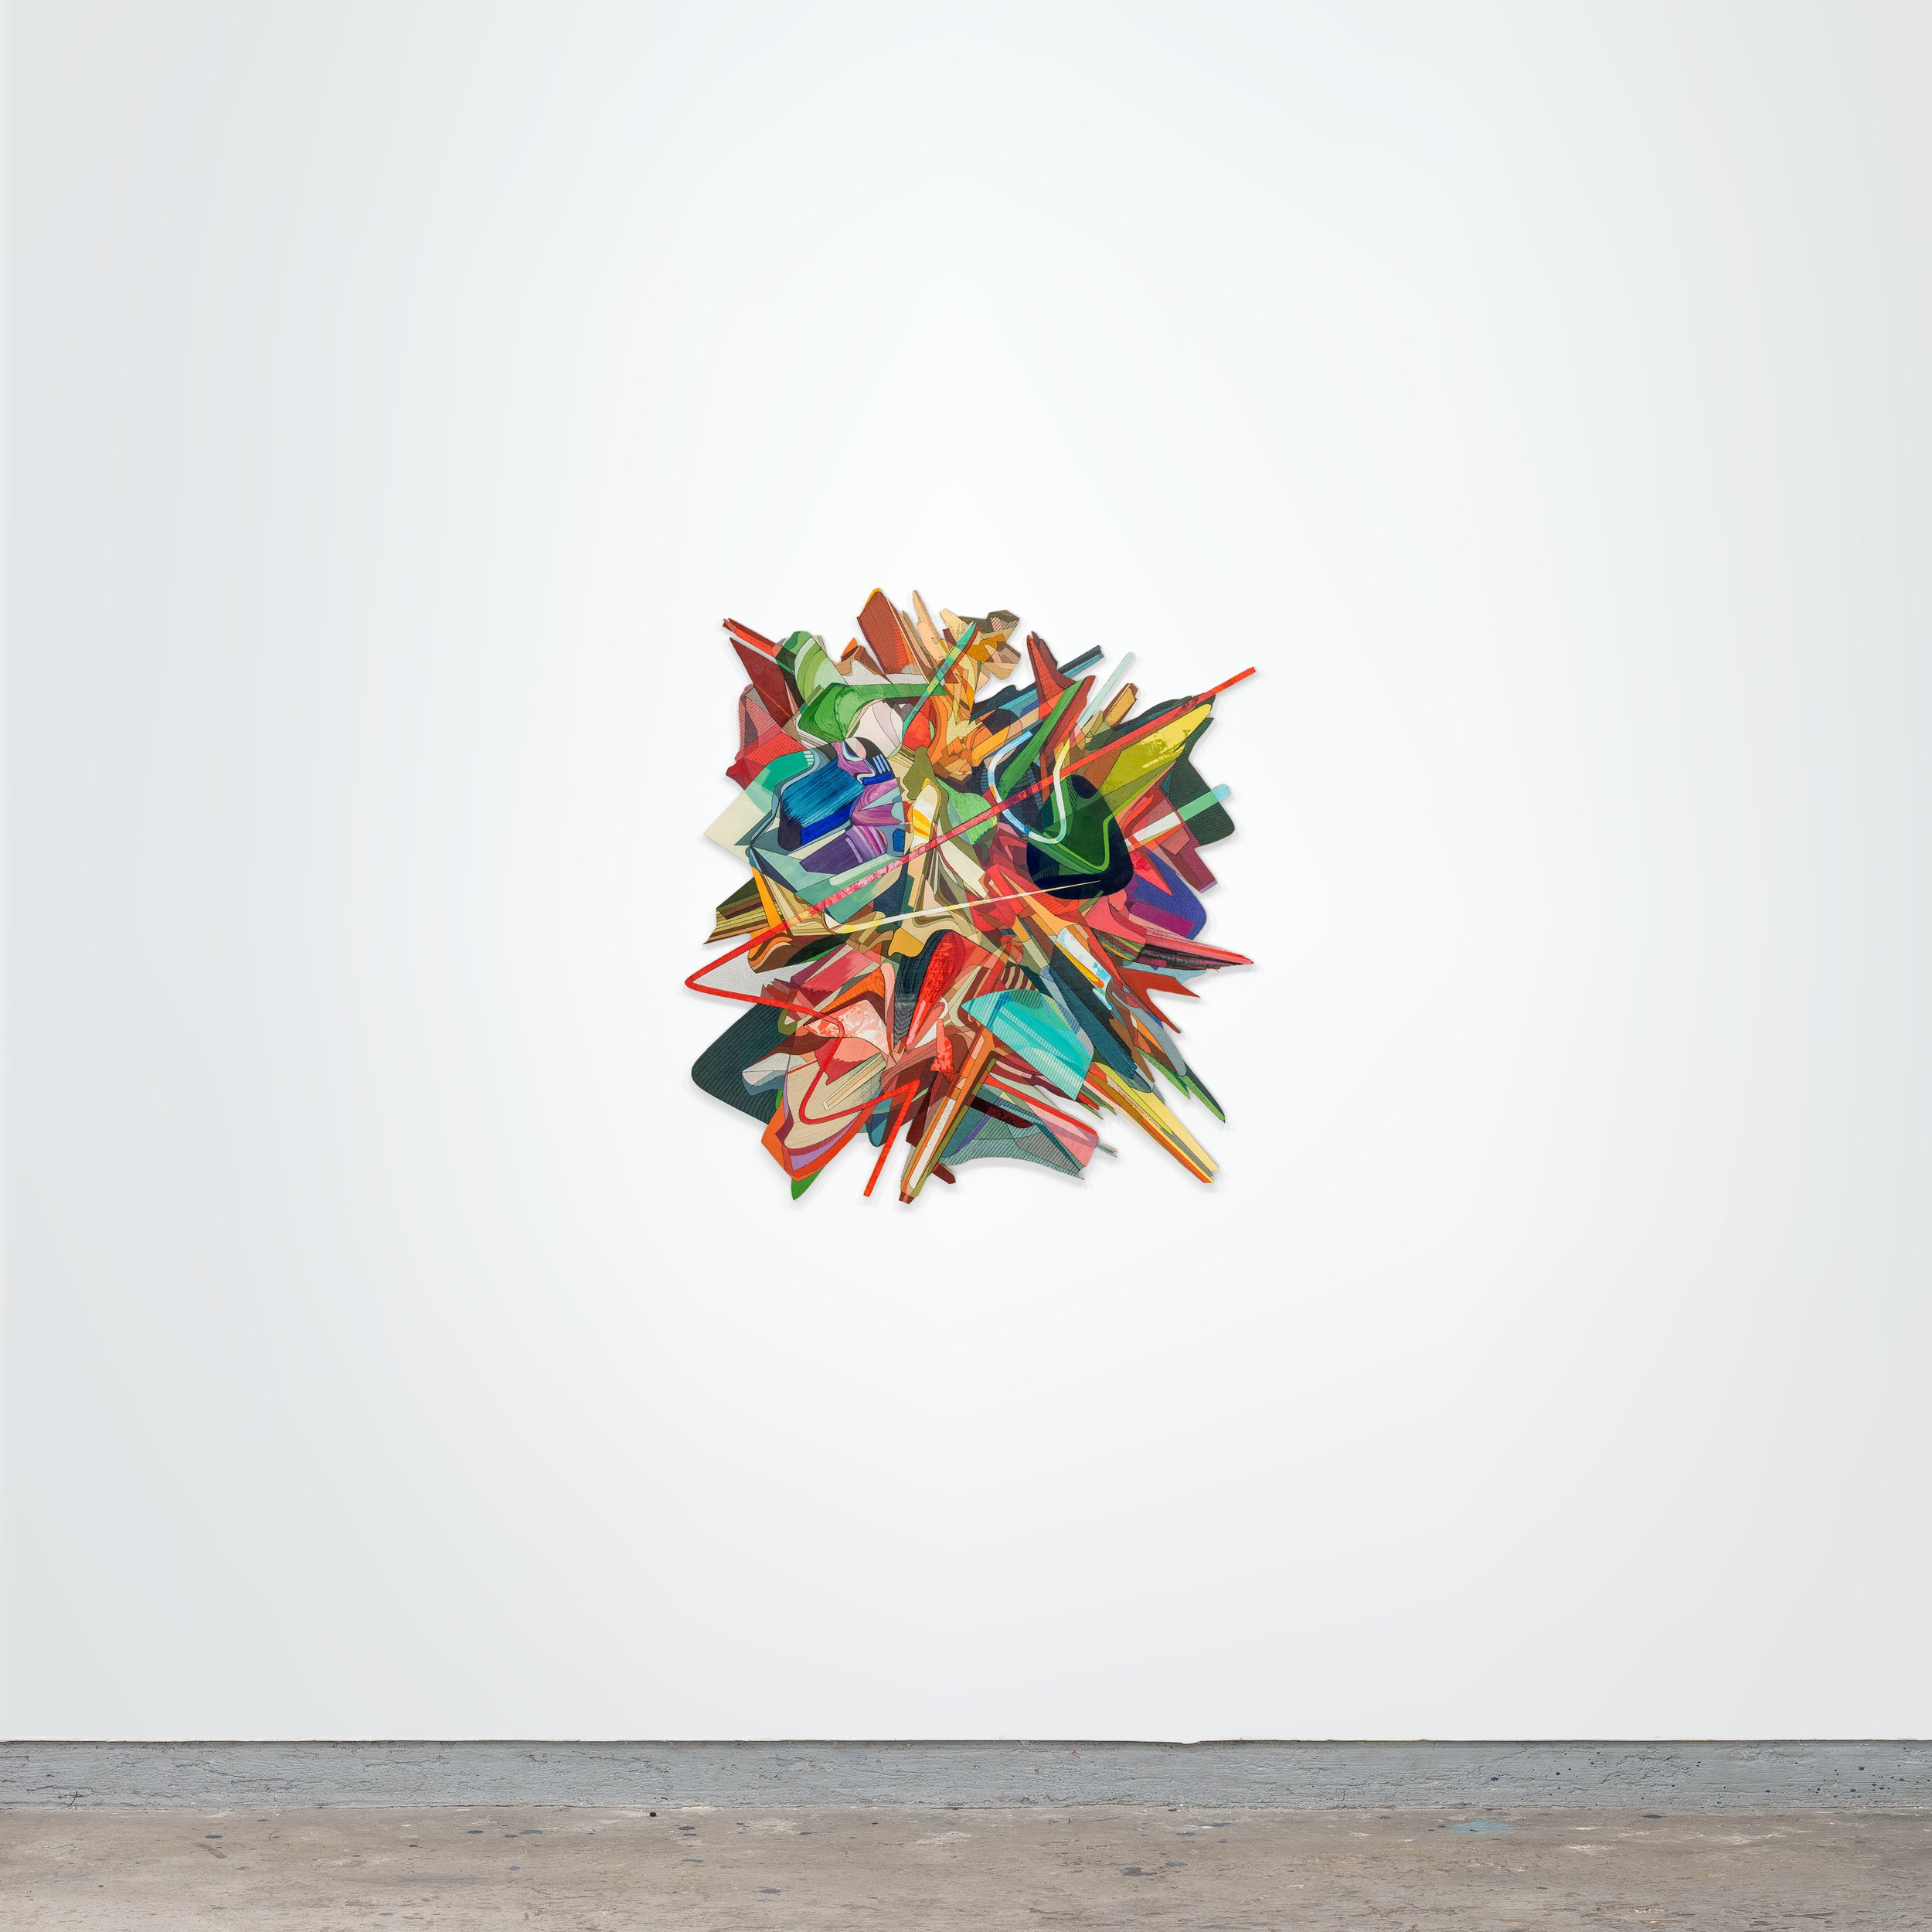 Mantis Arcoiris Oil & Acrylic on Linen mounted on Panel 100 x 93 cm 2023 by Omar Rodriguez-Graham-Muro.jpg